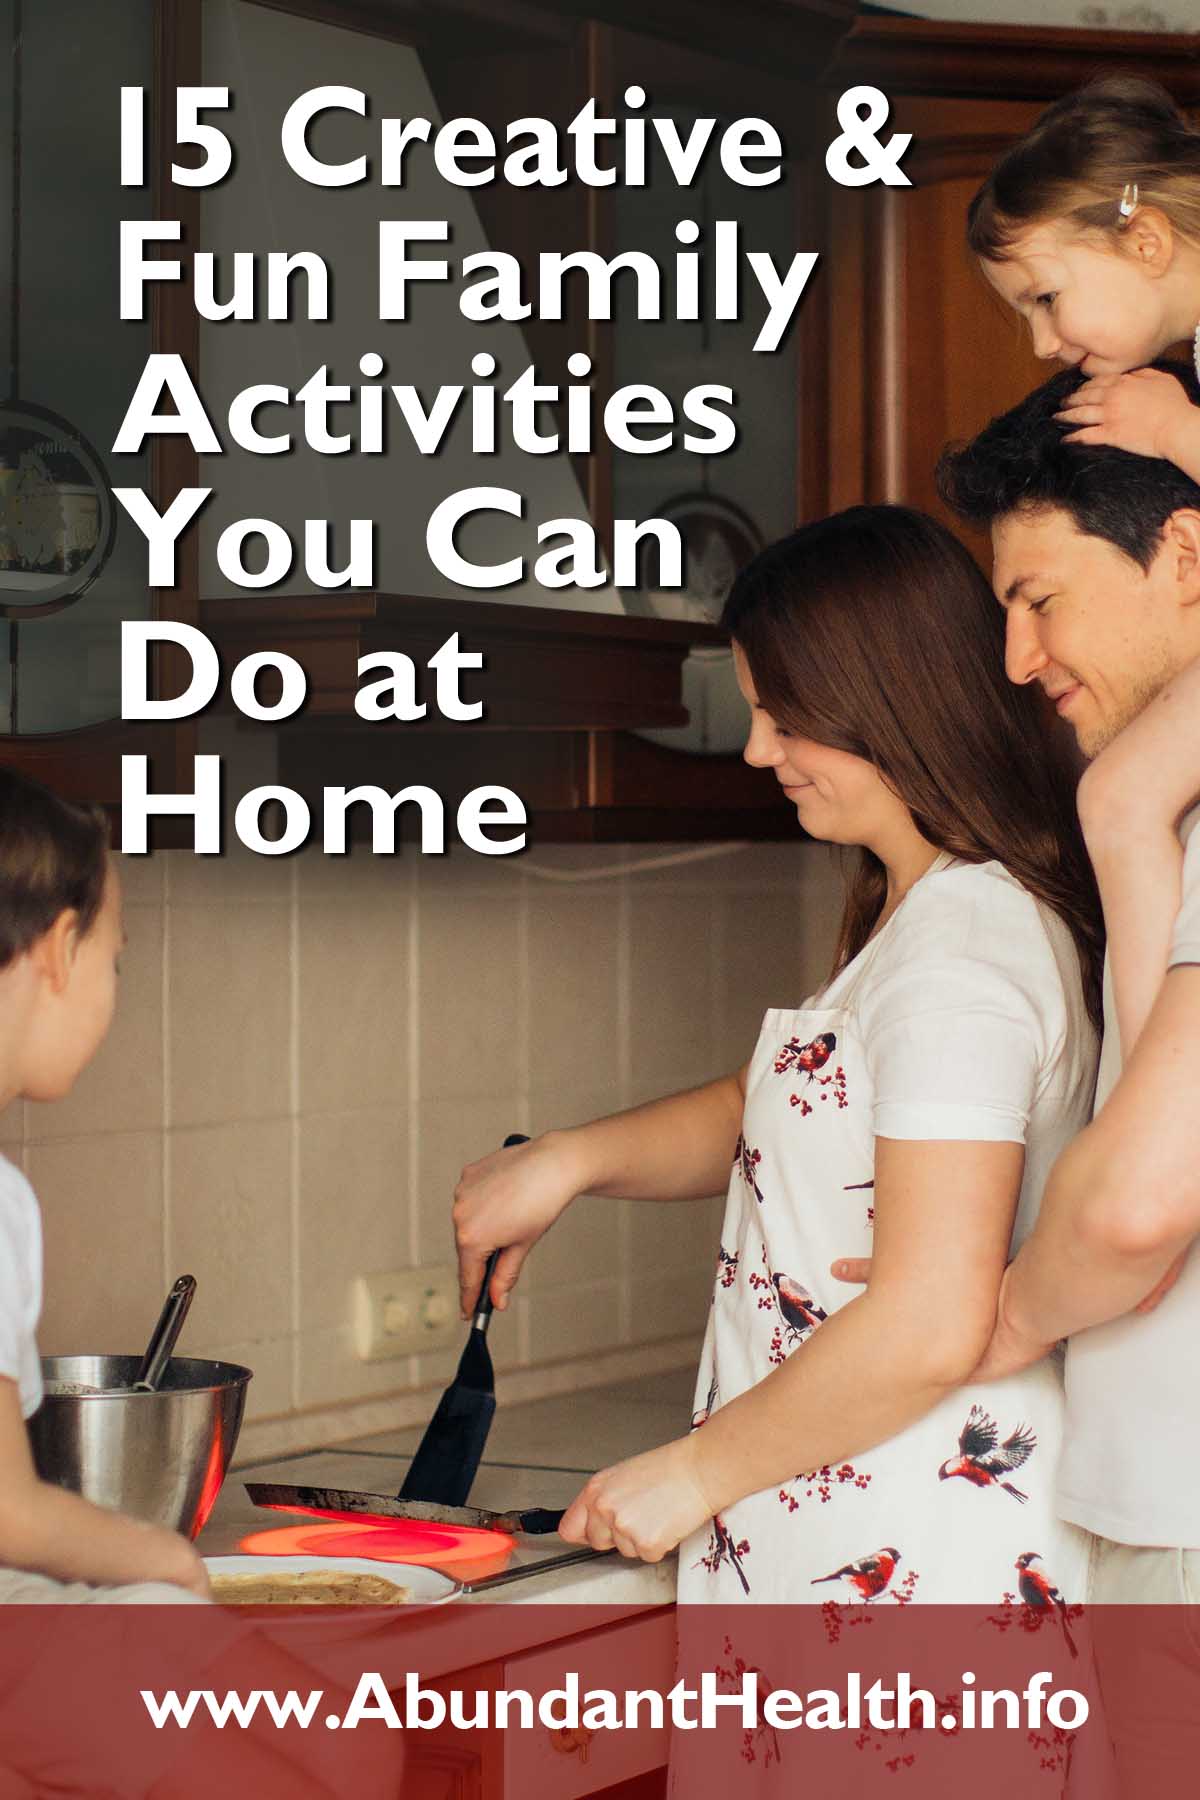 15 Creative & Fun Family Activities You Can Do at Home